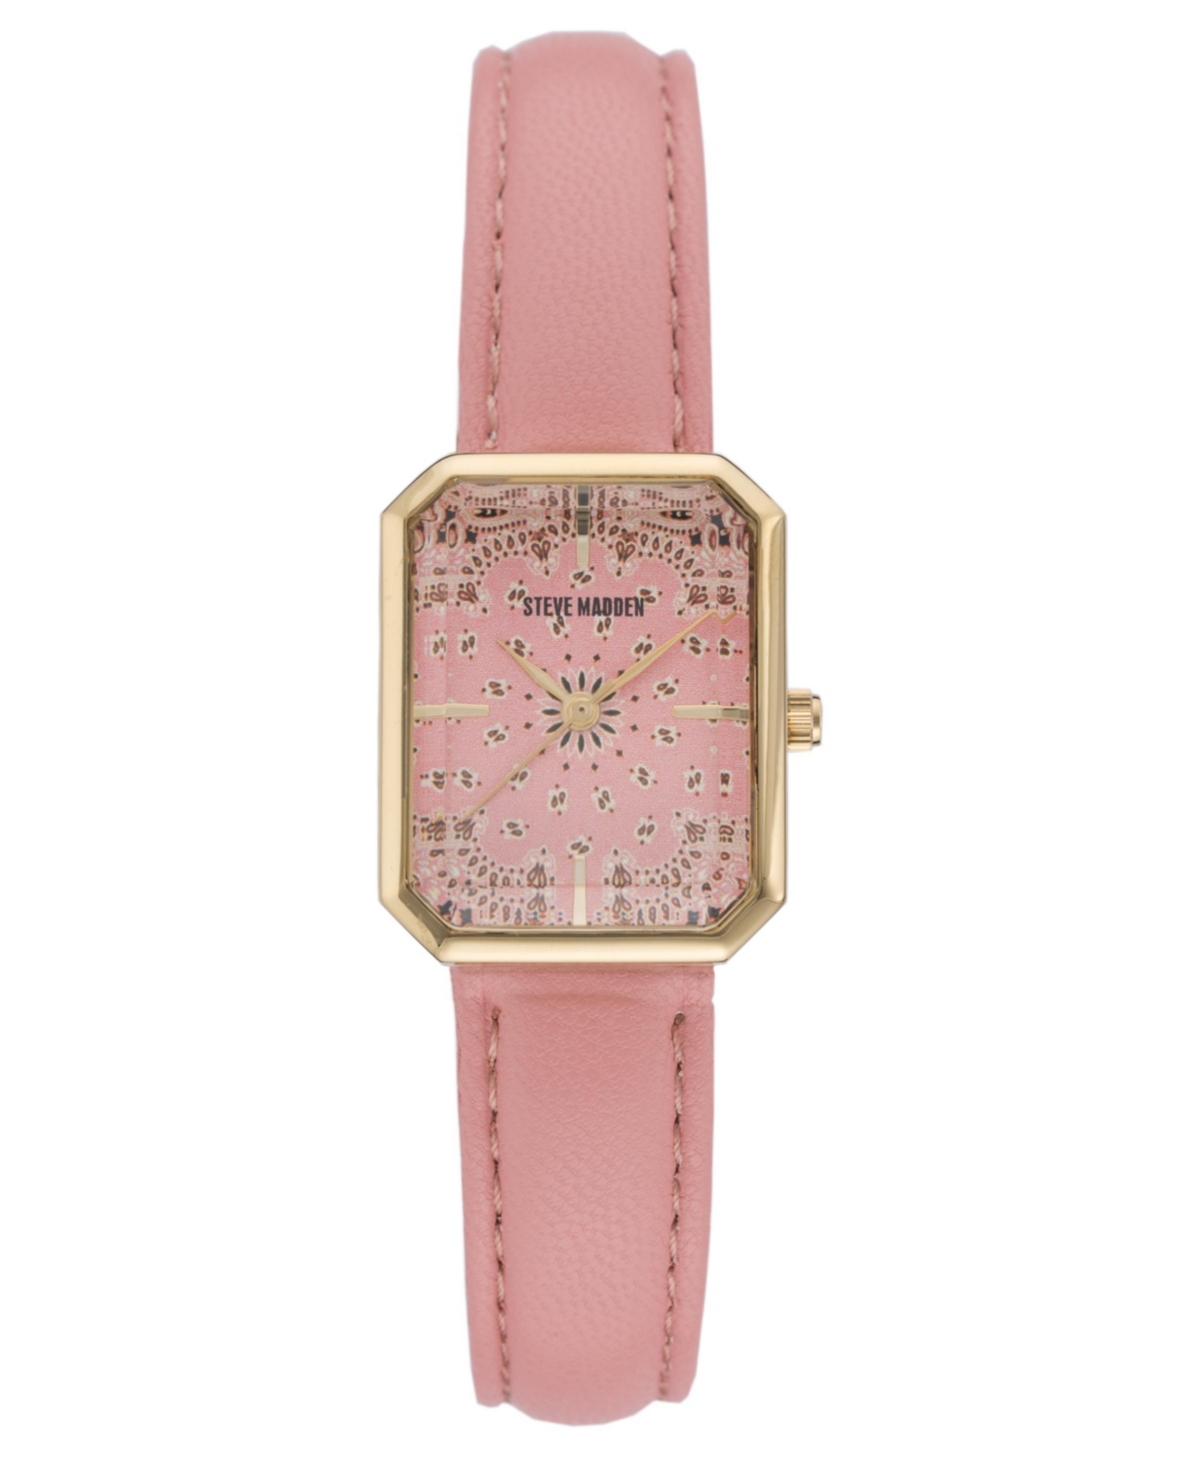 Steve Madden Women's Pink Polyurethane Leather Strap With Stitching Watch, 22x28mm